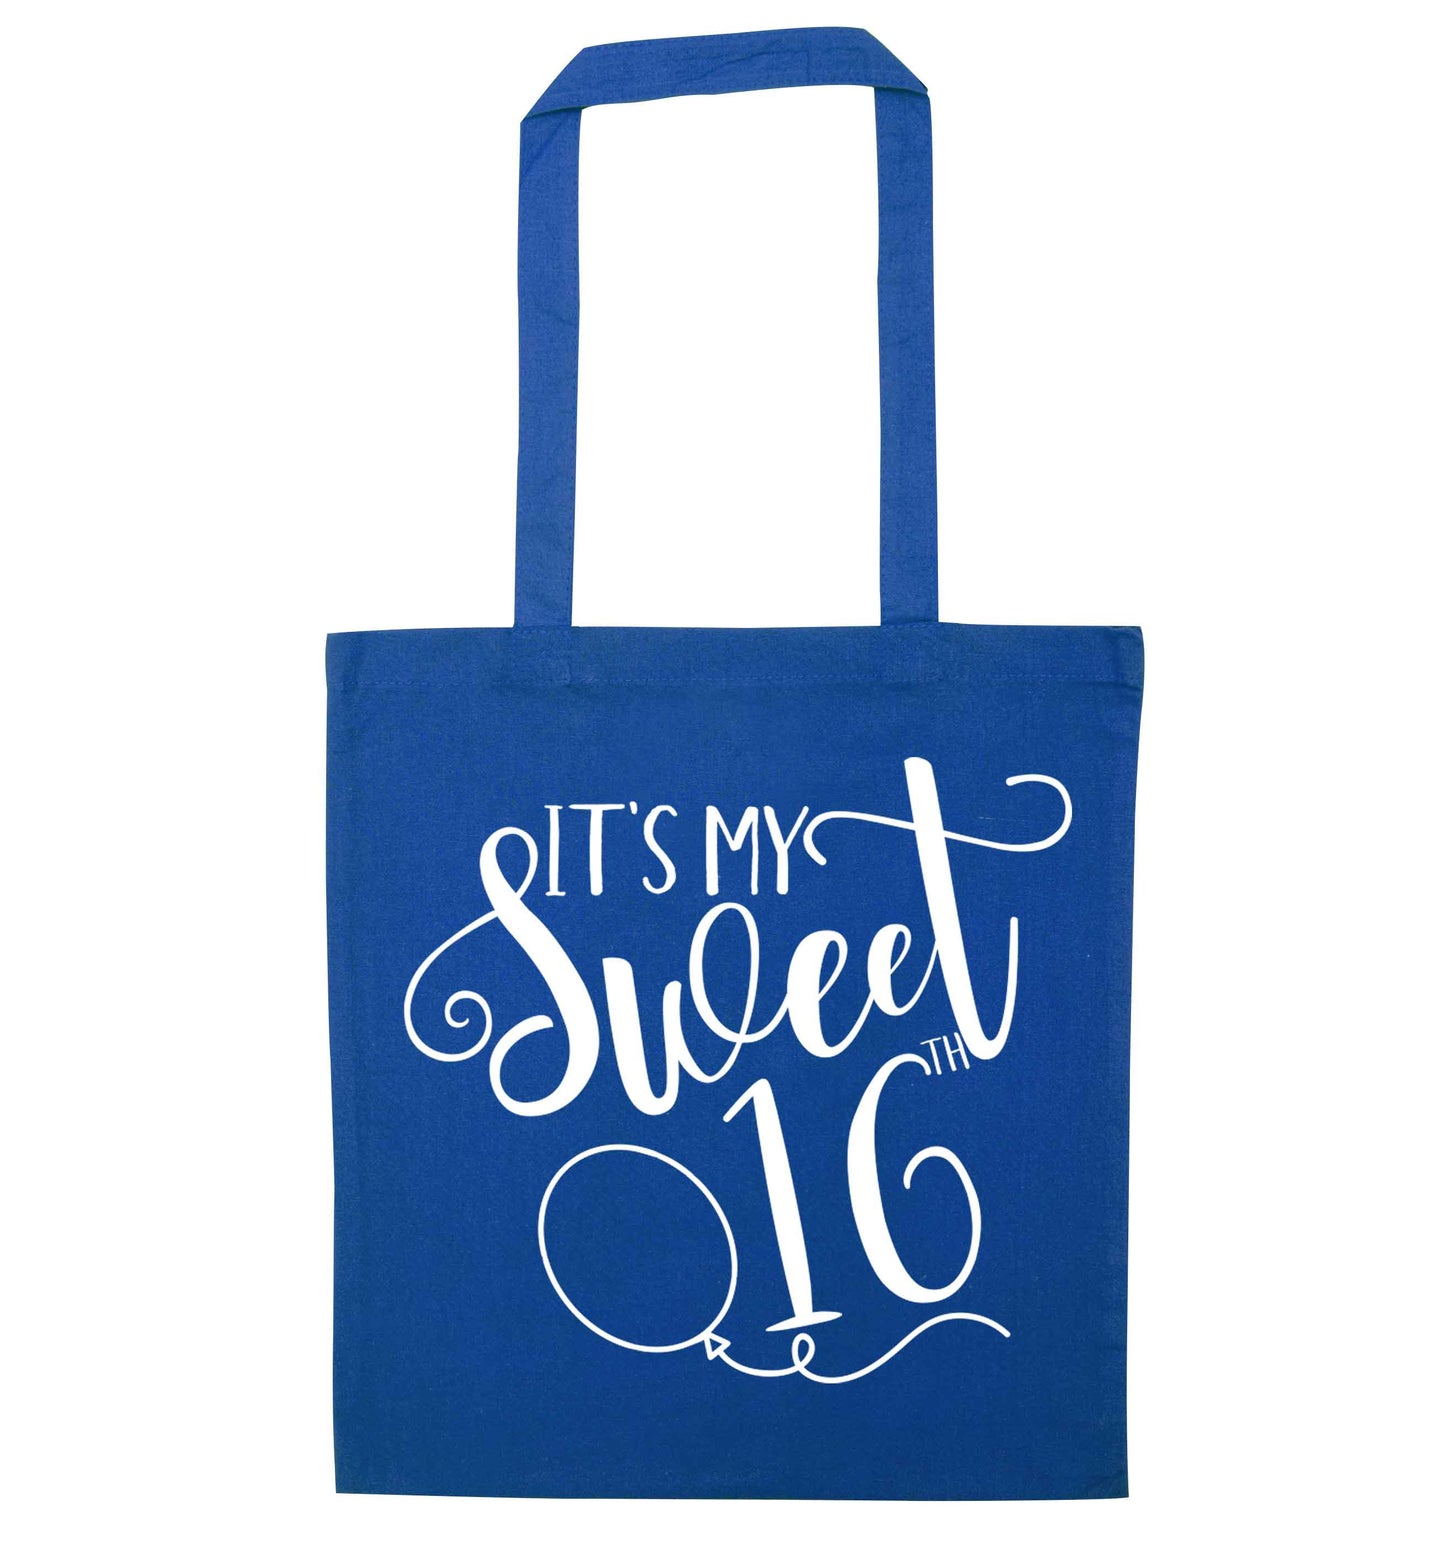 It's my sweet 16thblue tote bag